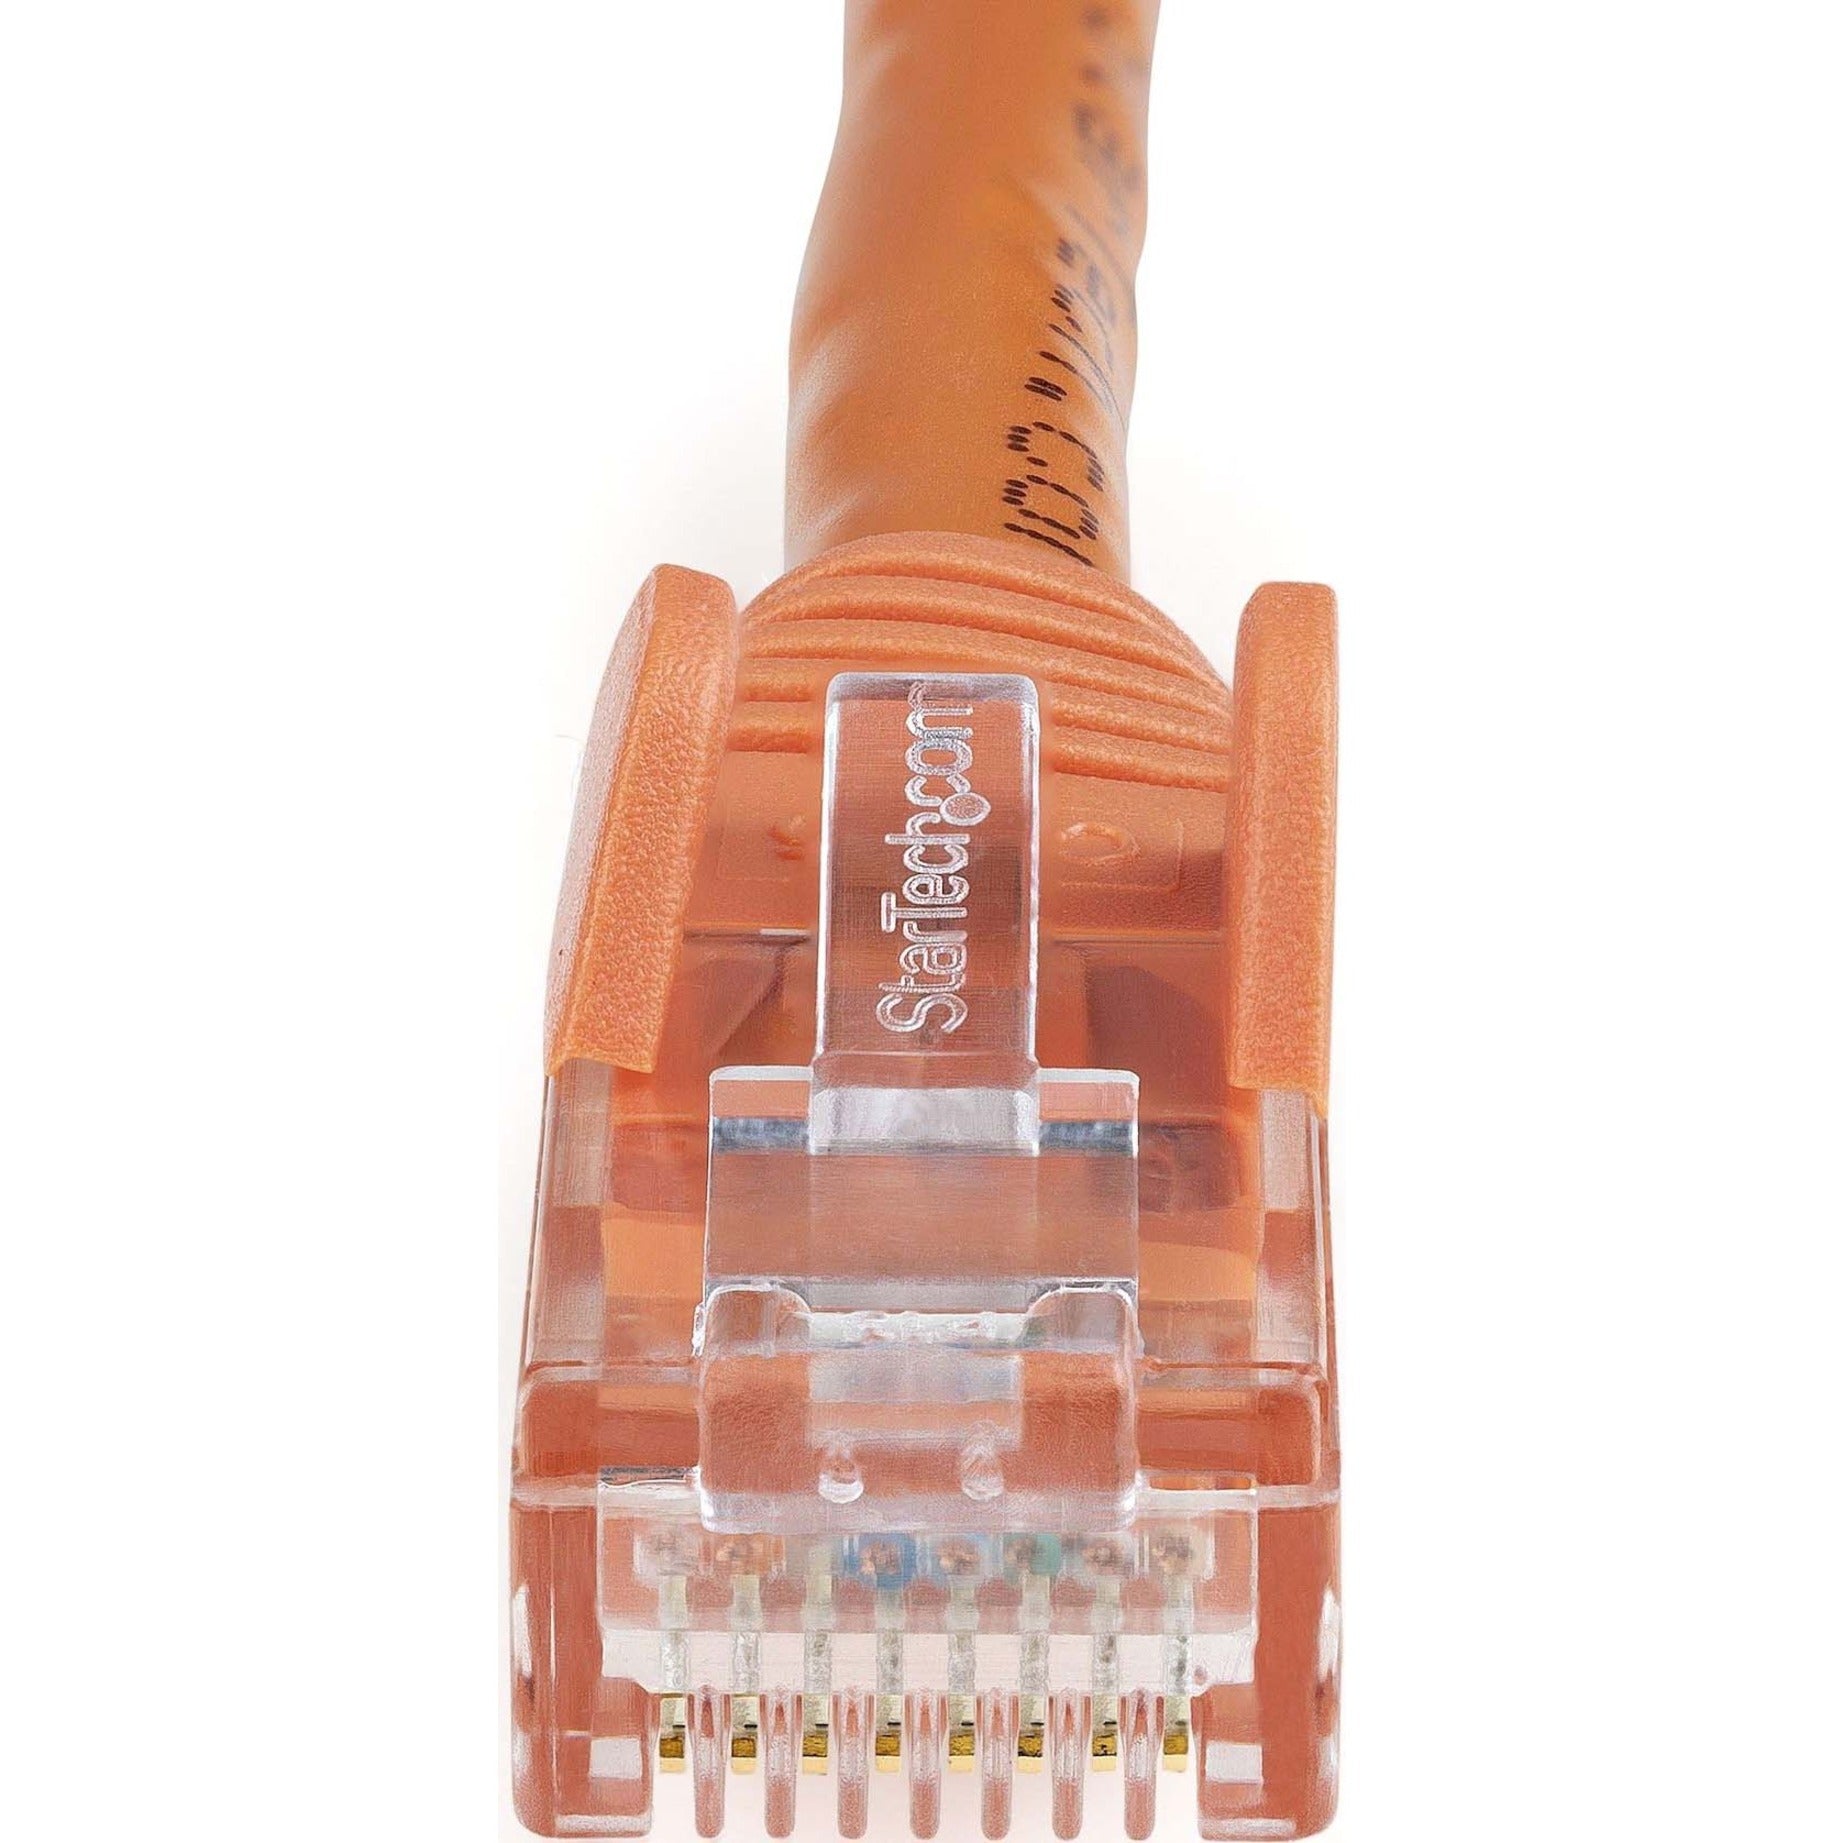 Marca: StarTech.com  Cable de conexión Cat6 UTP sin enganches de 3 pies de color naranja Garantía de por vida Velocidad de transferencia de datos de 10 Gbps